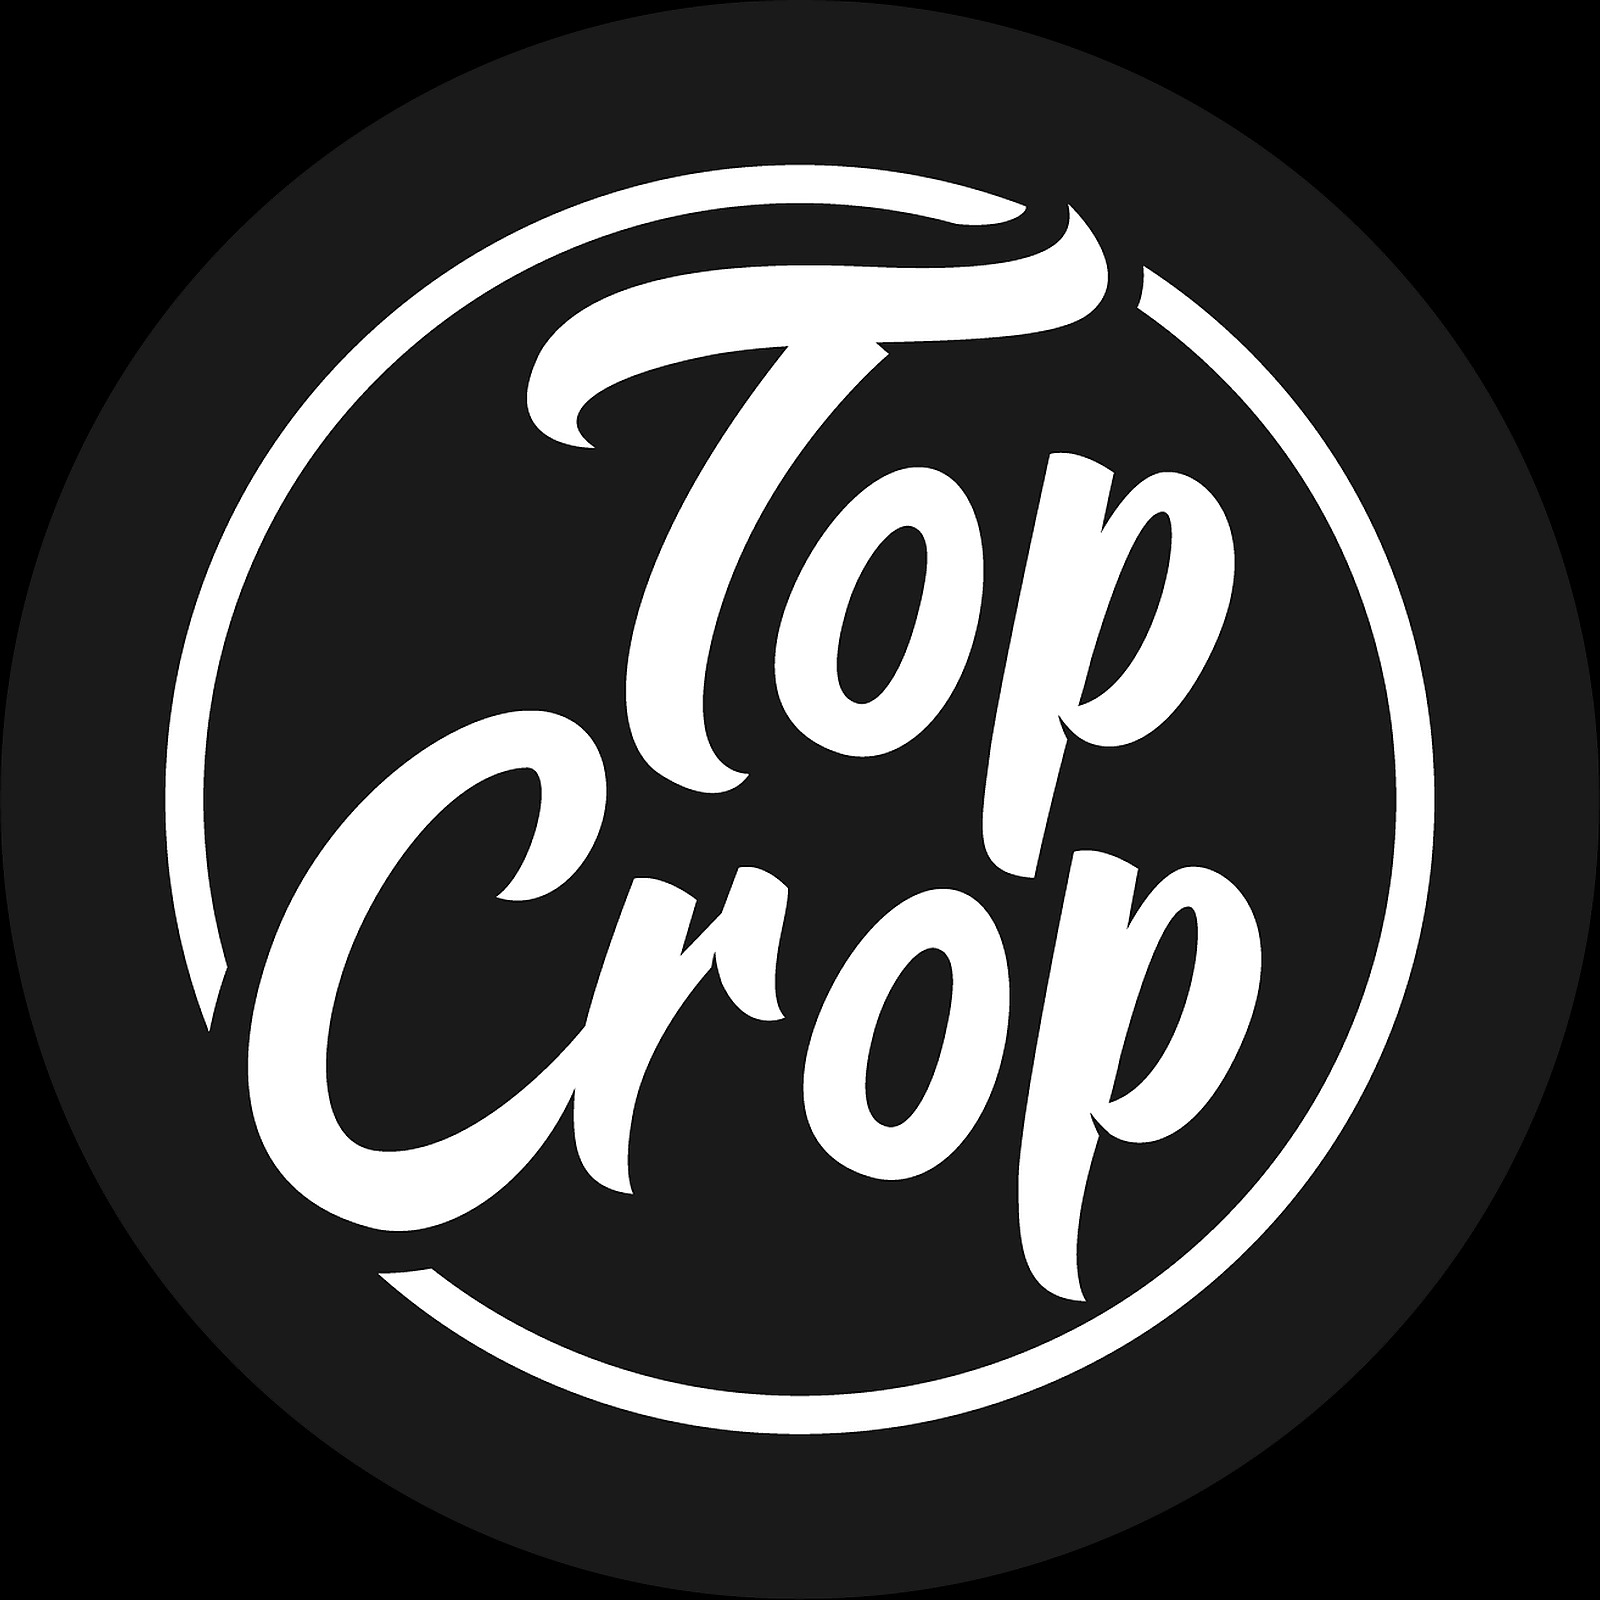 Top Crop Cannabis Co.-logo